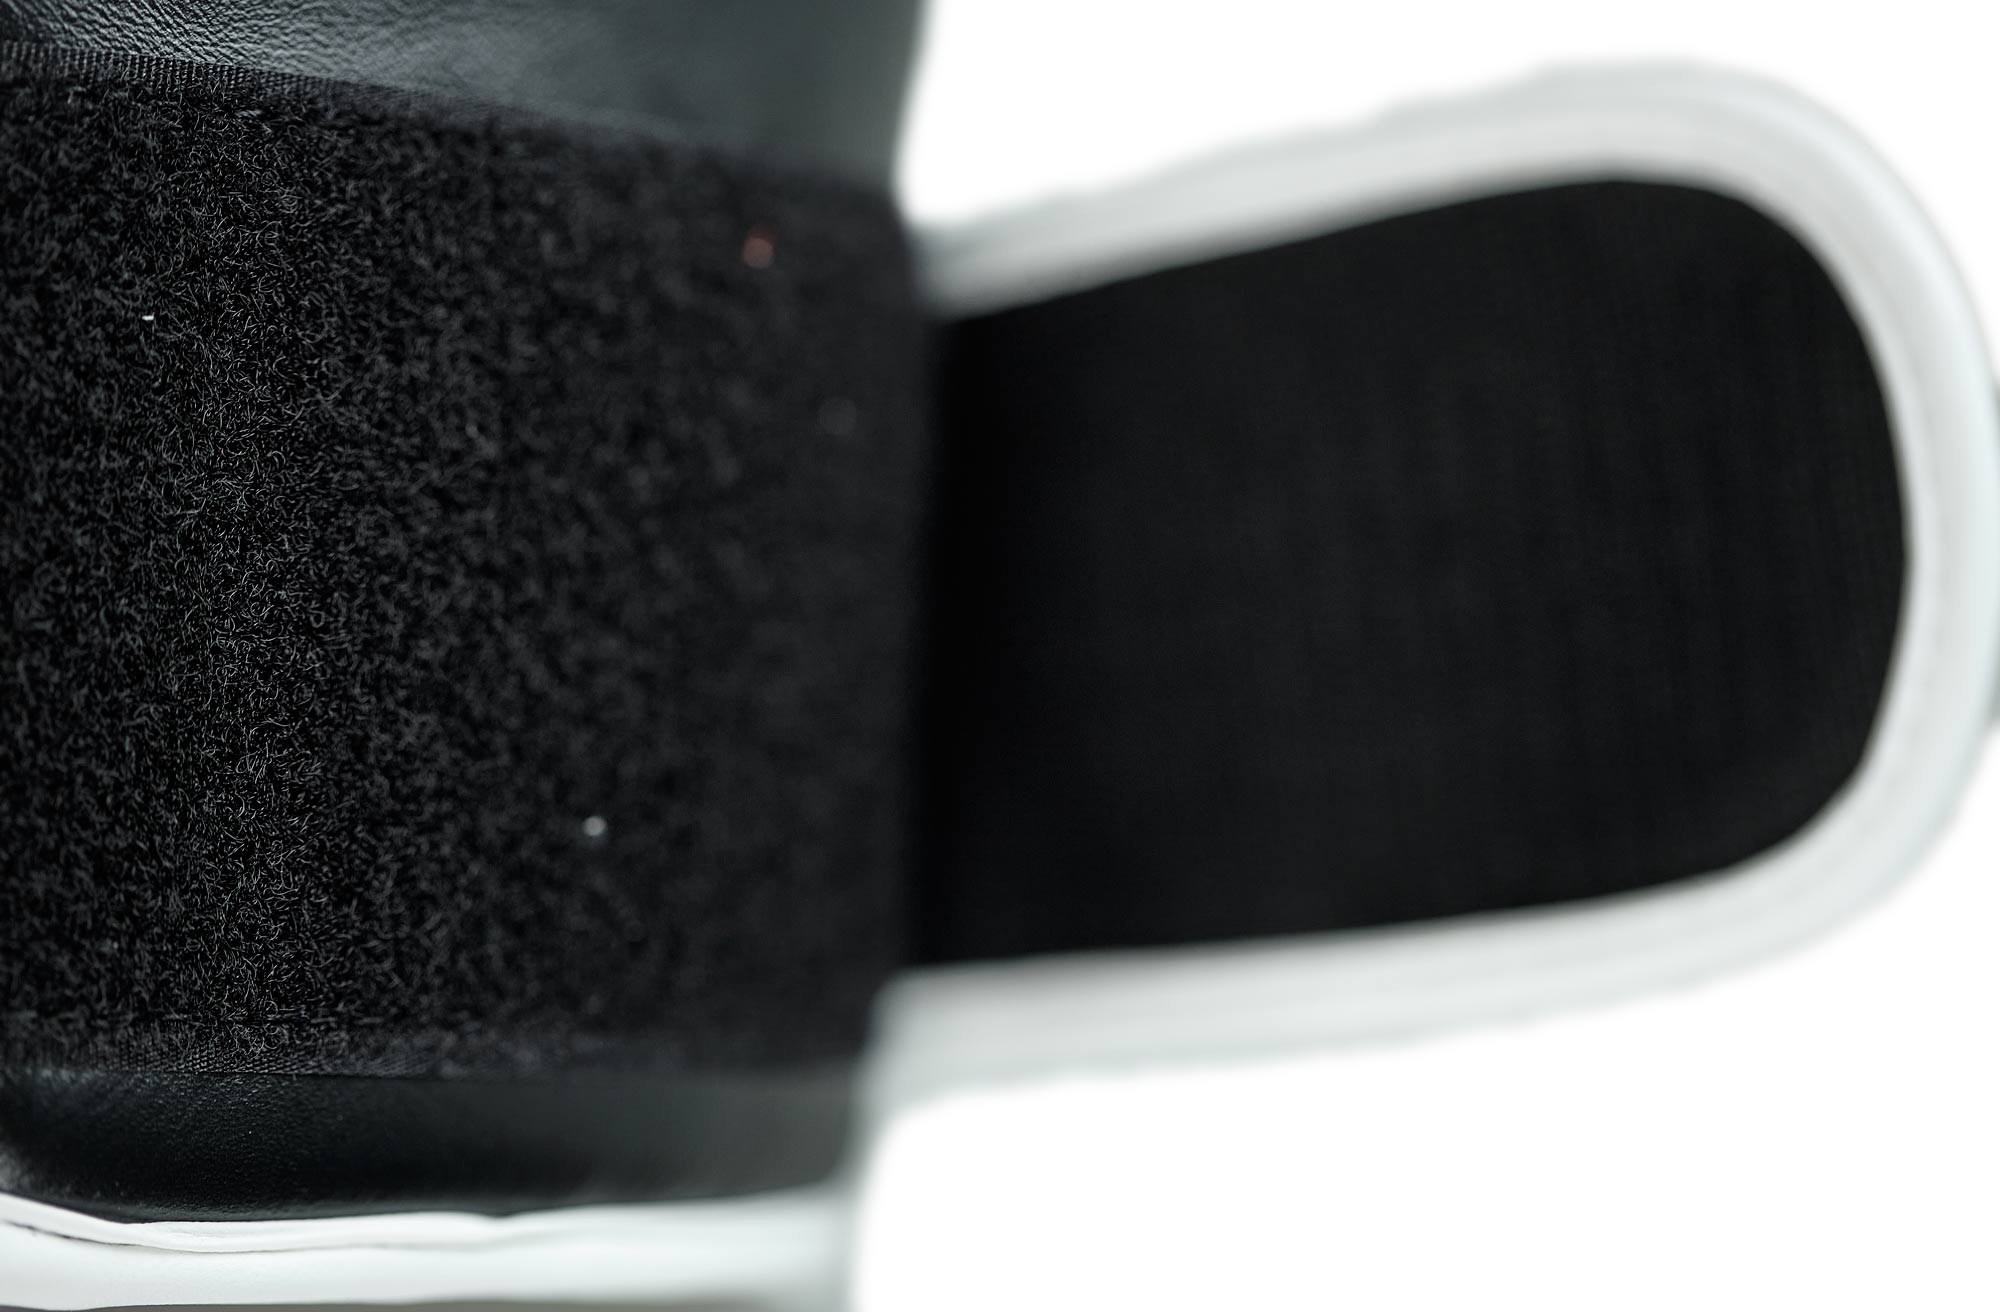 adidas competition glove Speed 165 adiSBG165, black/white